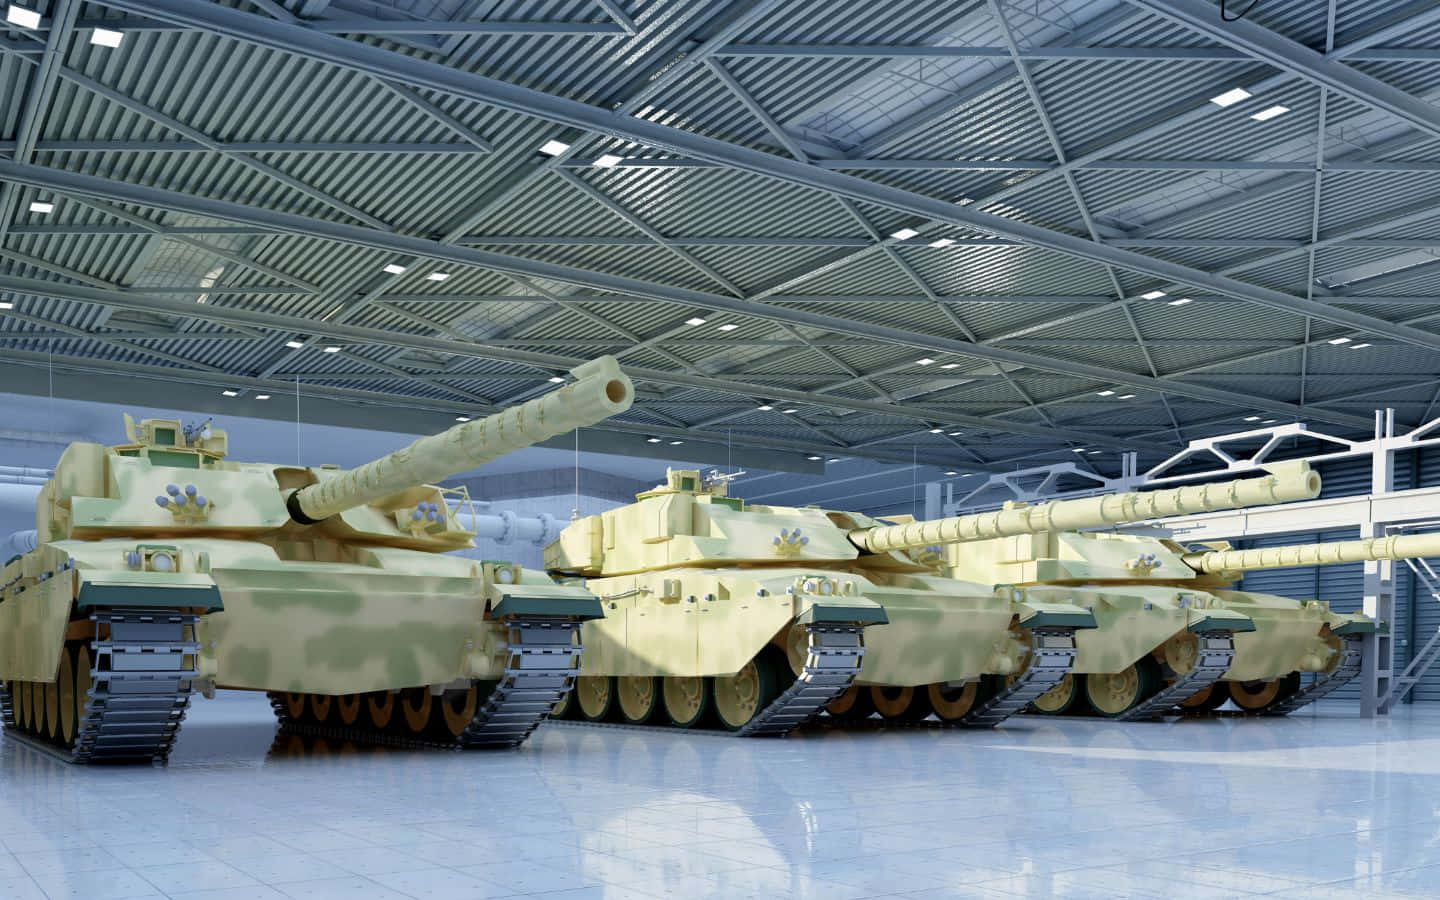 1440x900 Tanks Inside Hangar Wallpaper